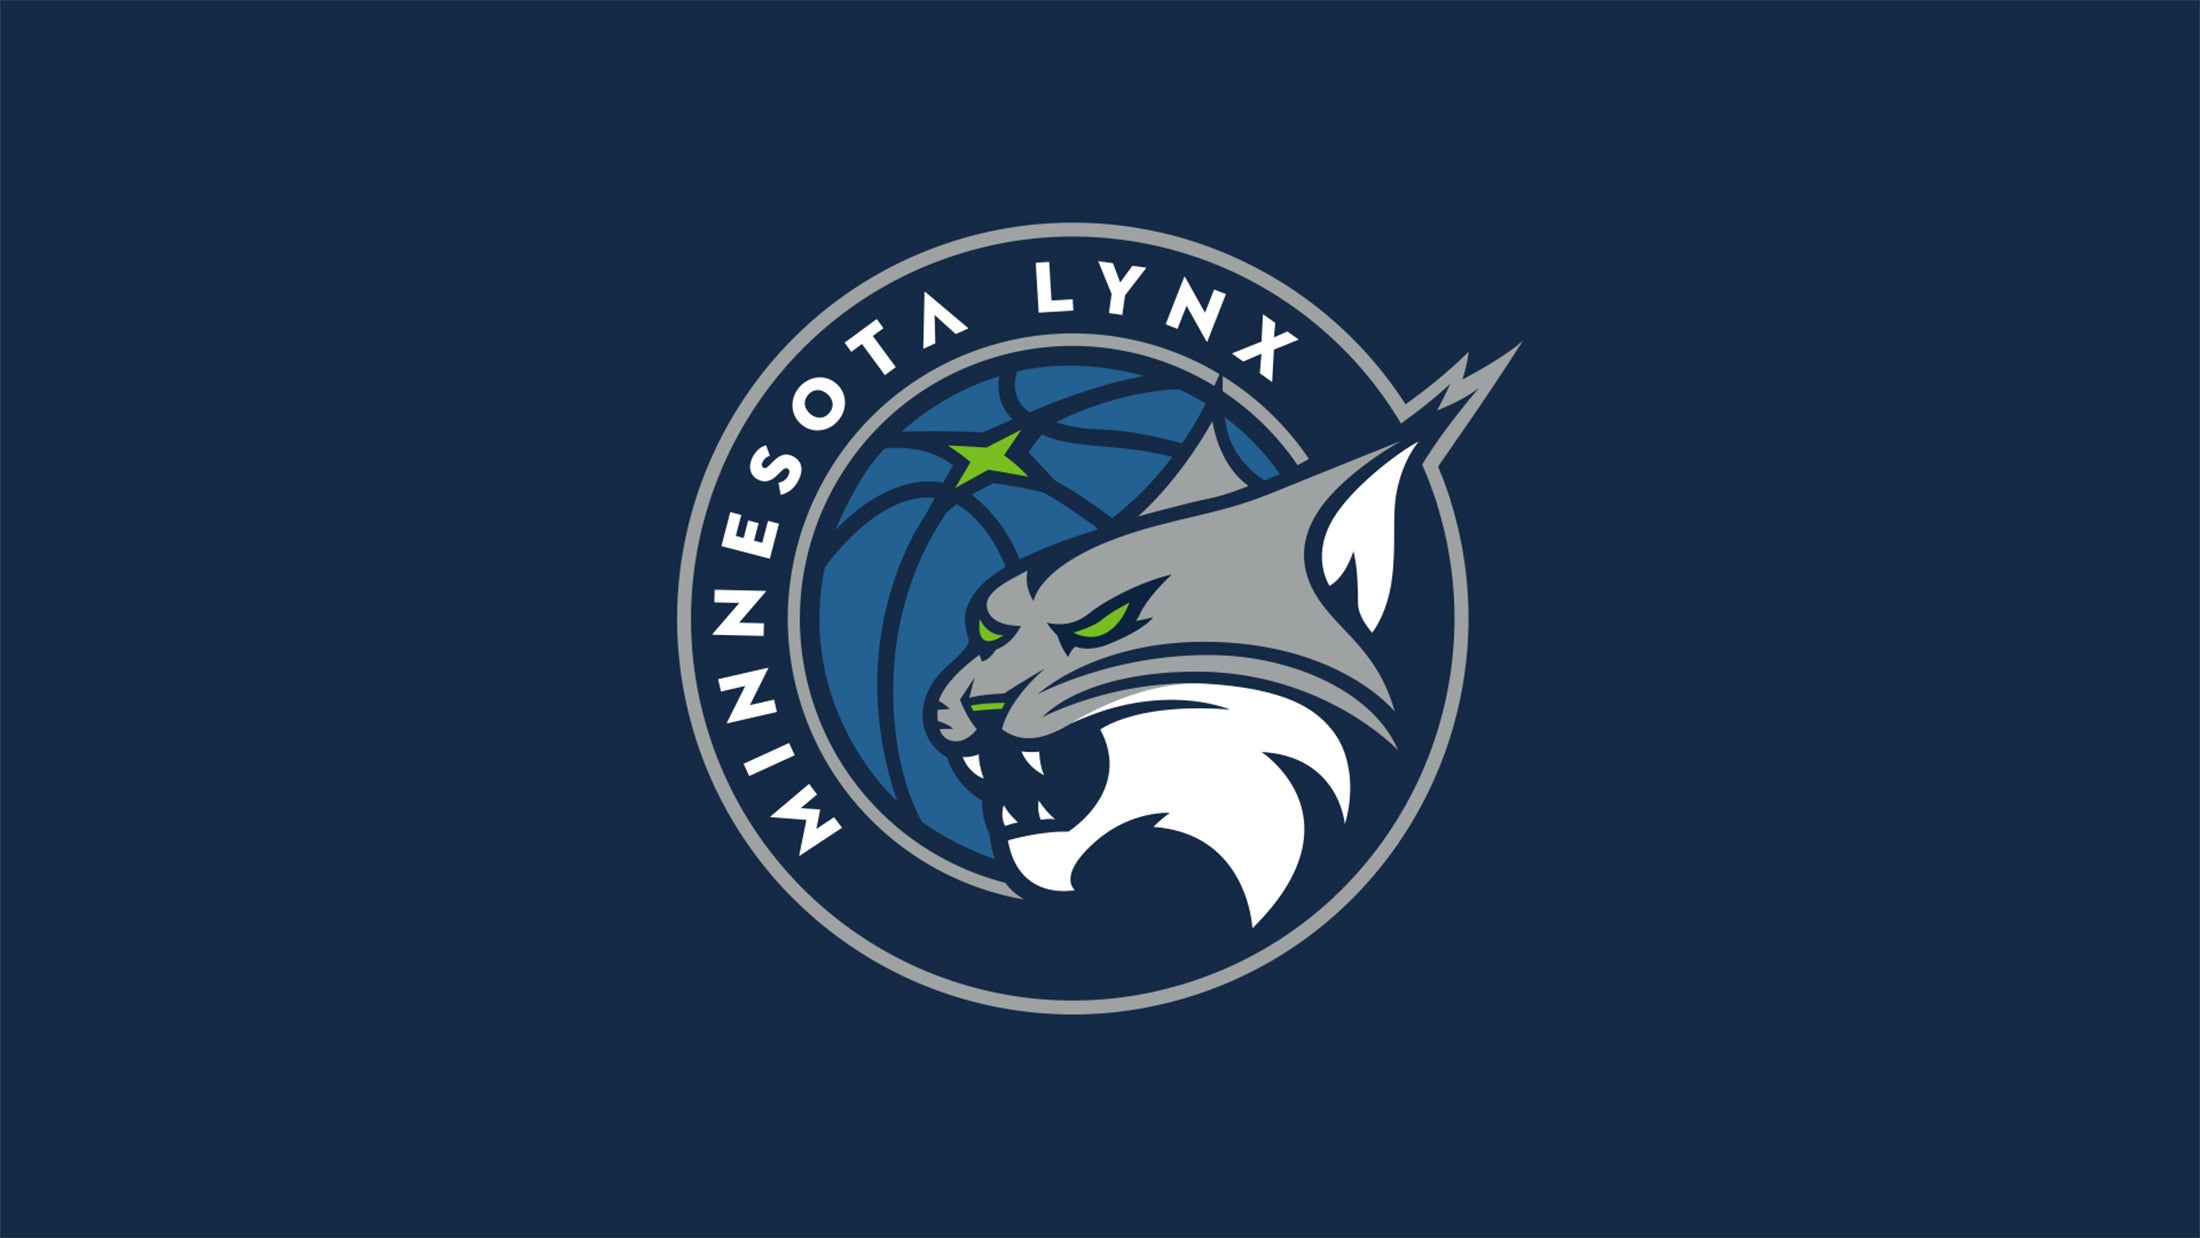 Minnesota Lynx vs. New York Liberty at Target Center